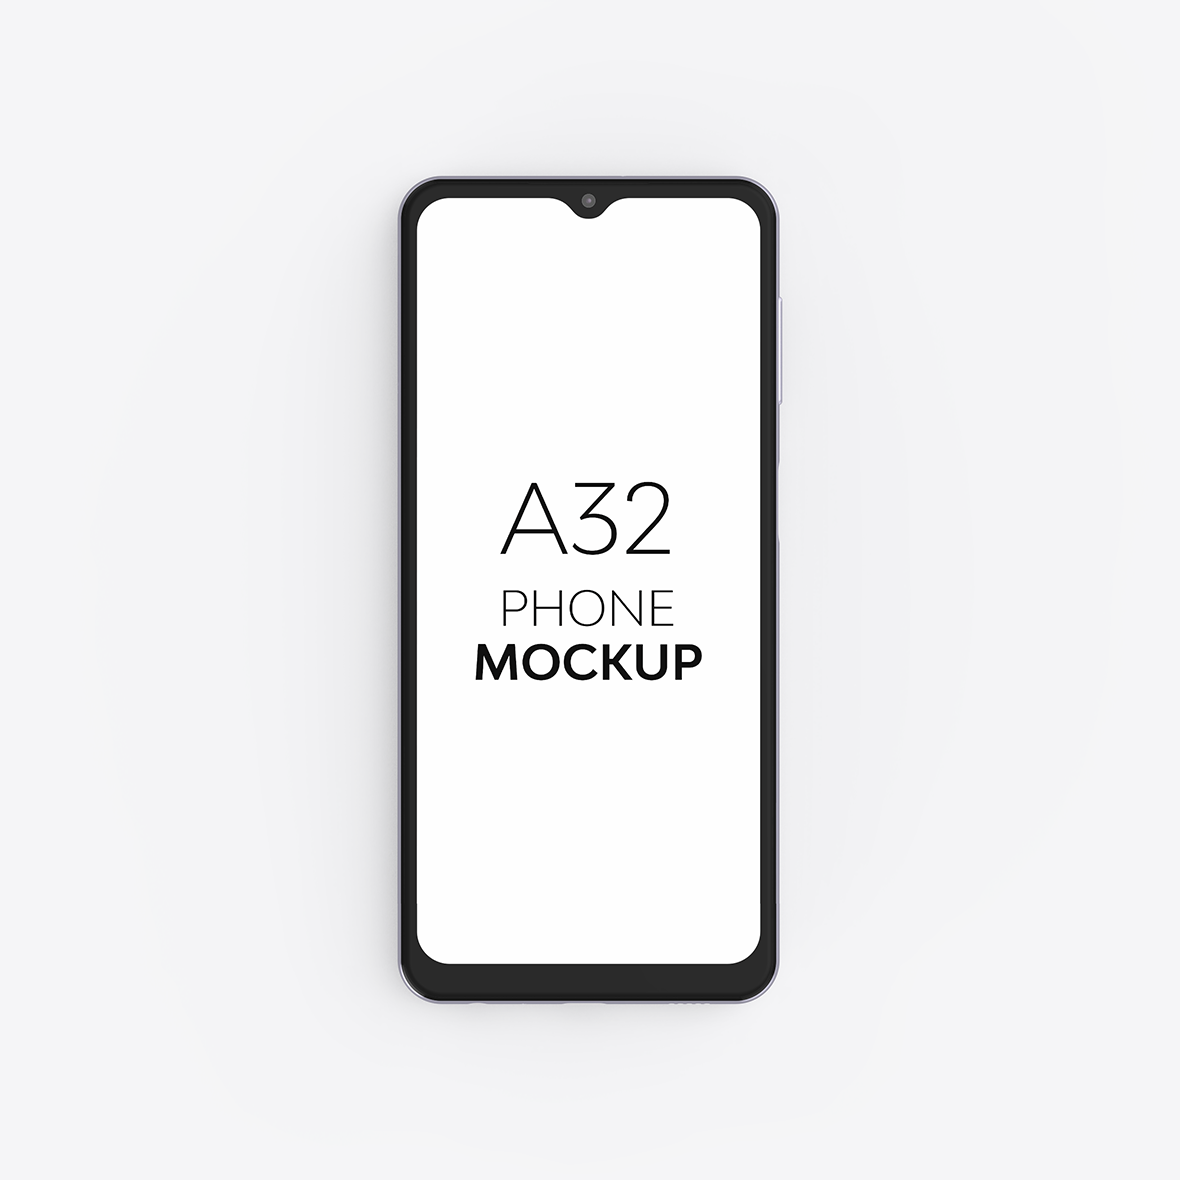 A32 Phone Mockup